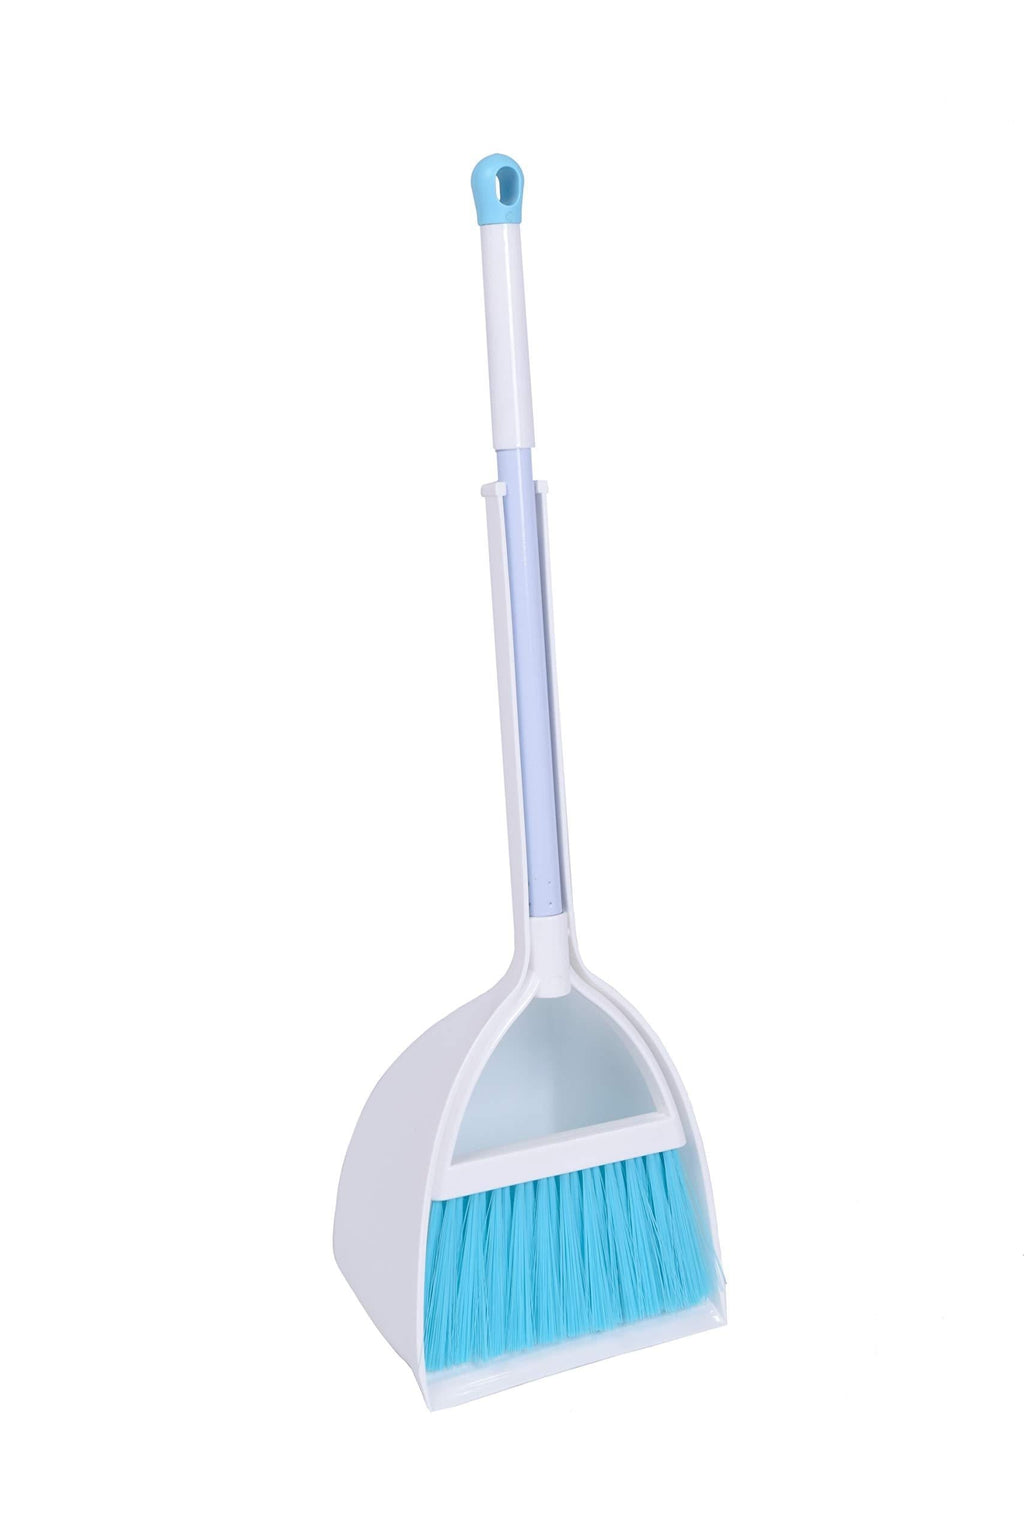 Qidiwin Mini Broom&Dustpan, Home&Kitchen Sweeping for Kids(White+Blue) - LeoForward Australia